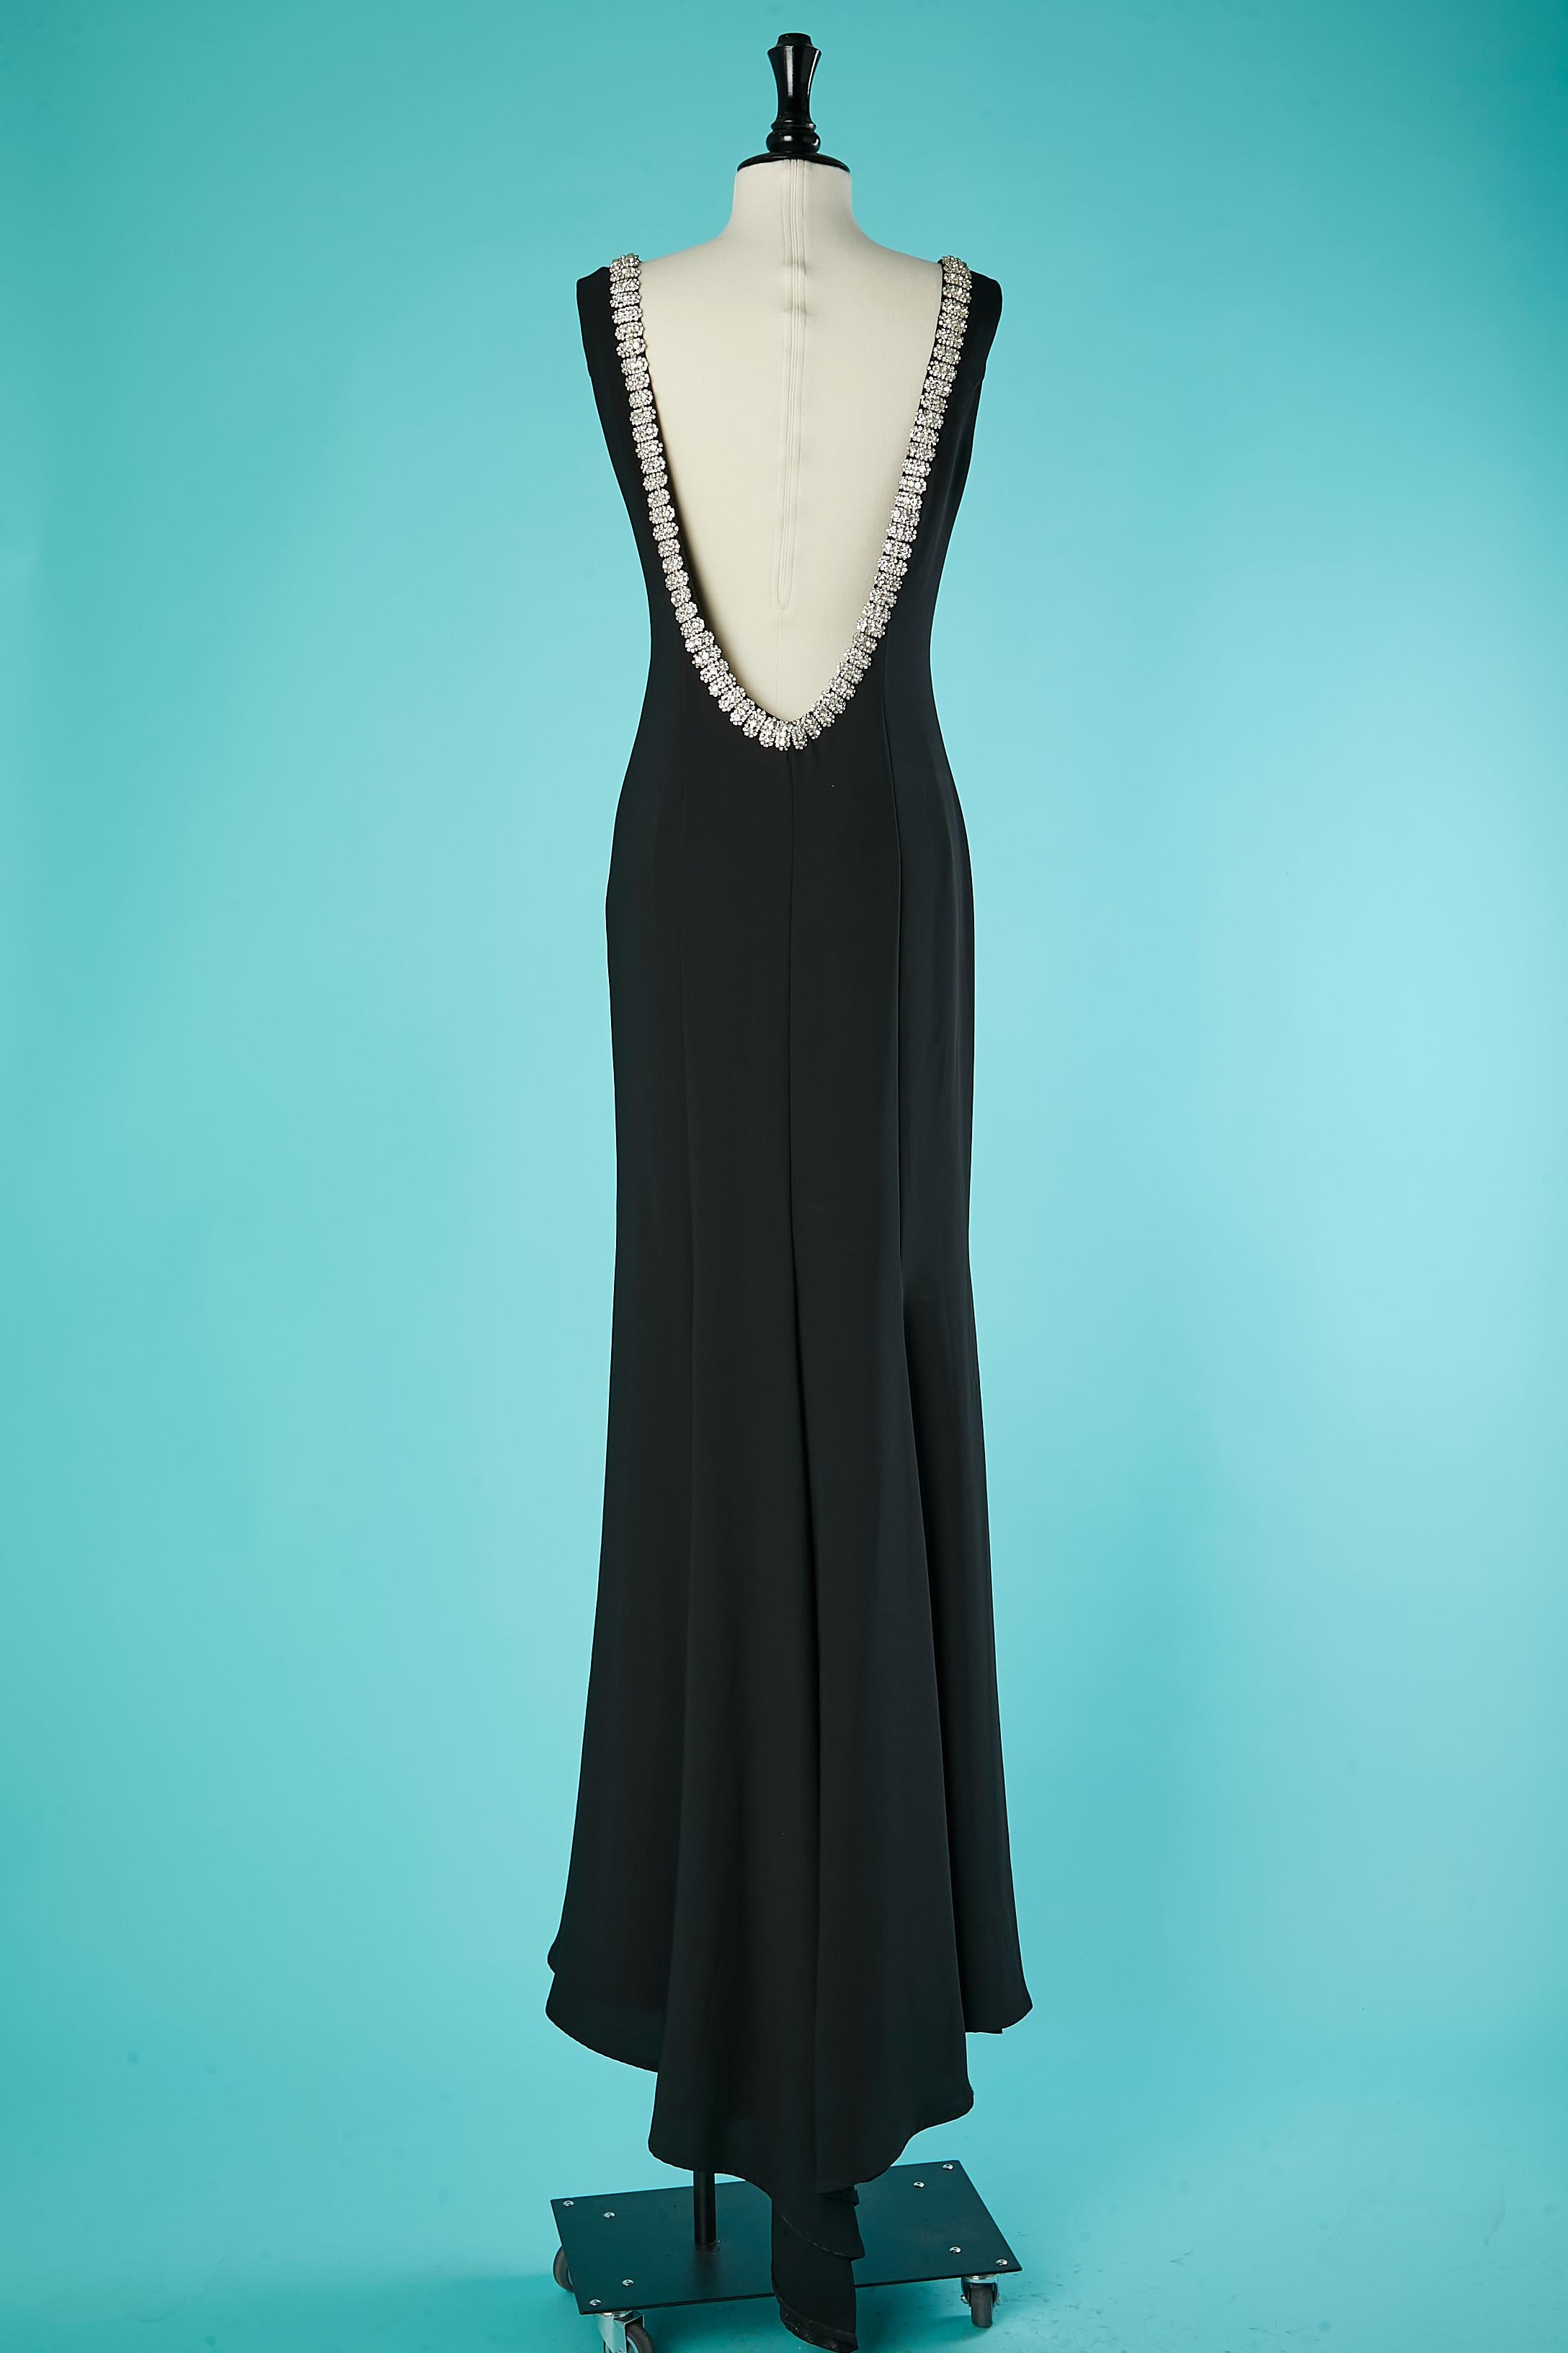 Black backless evening dress with rhinestone neckline Gai Mattiolo Red Carpet  For Sale 2